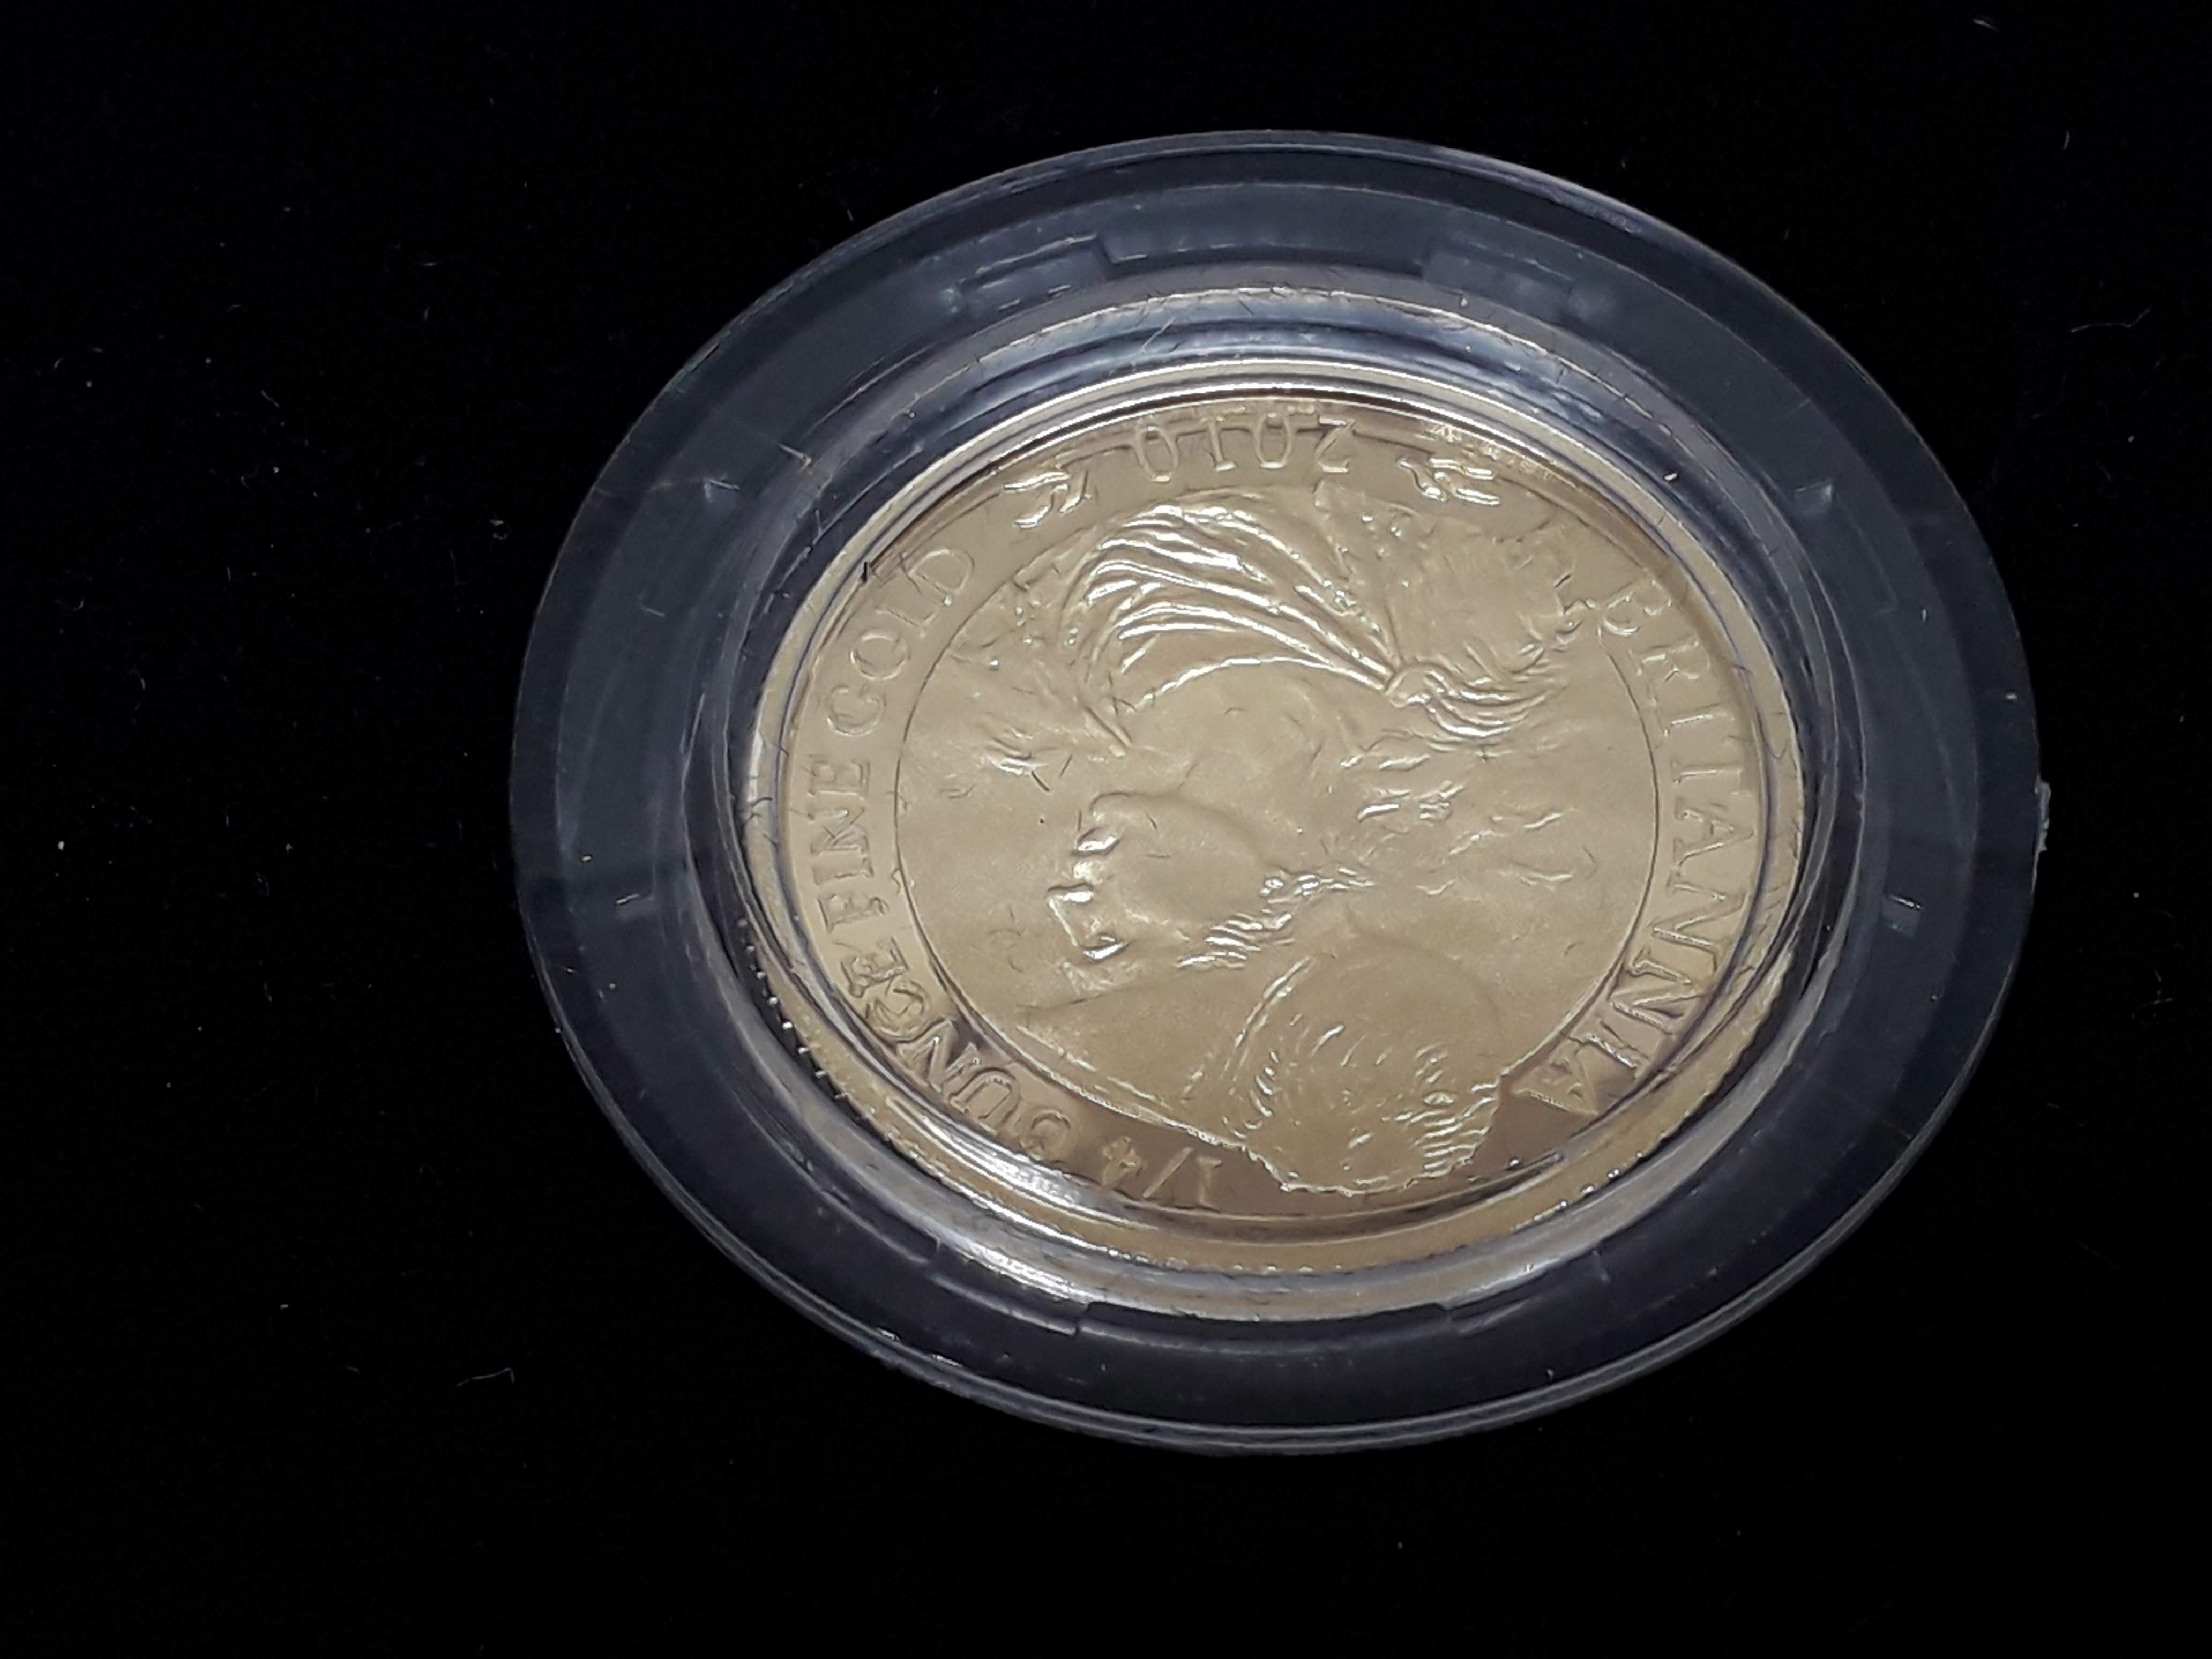 Elizabeth II Royal Mint 2010 Britannia Three Coin Gold Proof Set comprising £10, £25 & £50, 0.9167 - Image 3 of 7